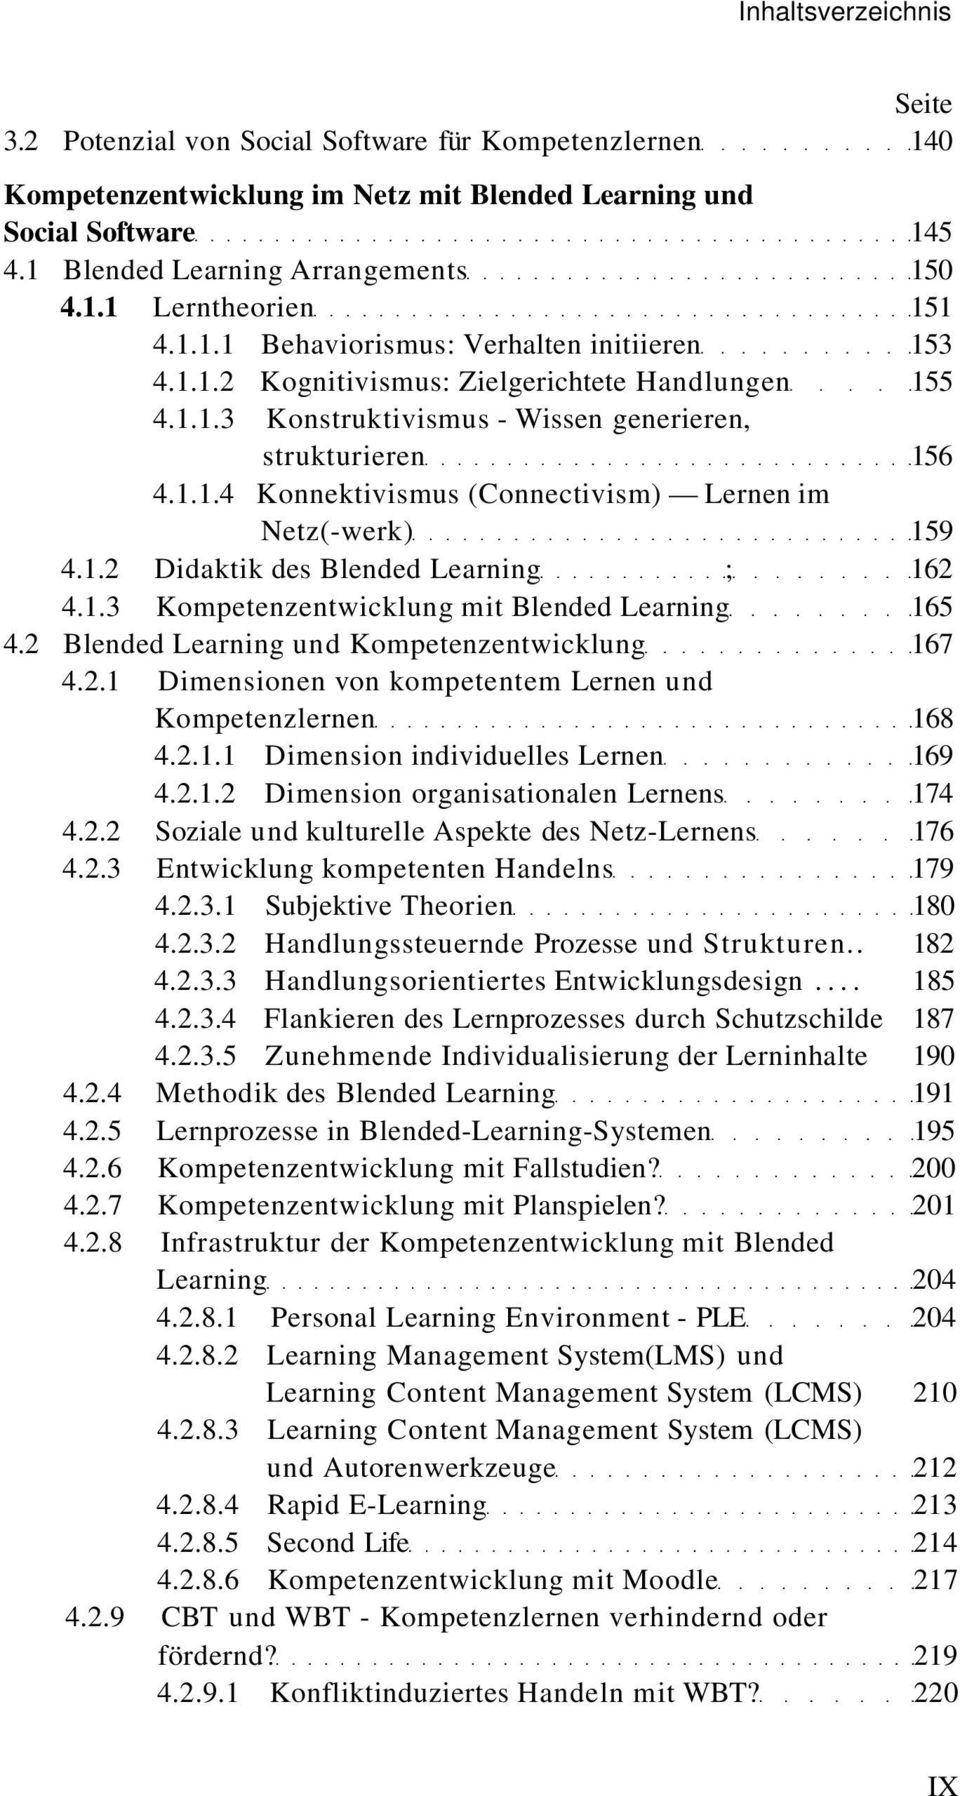 1.3 Kompetenzentwicklung mit Blended Learning 165 4.2 Blended Learning und Kompetenzentwicklung 167 4.2.1 Dimensionen von kompetentem Lernen und Kompetenzlernen 168 4.2.1.1 Dimension individuelles Lernen 169 4.